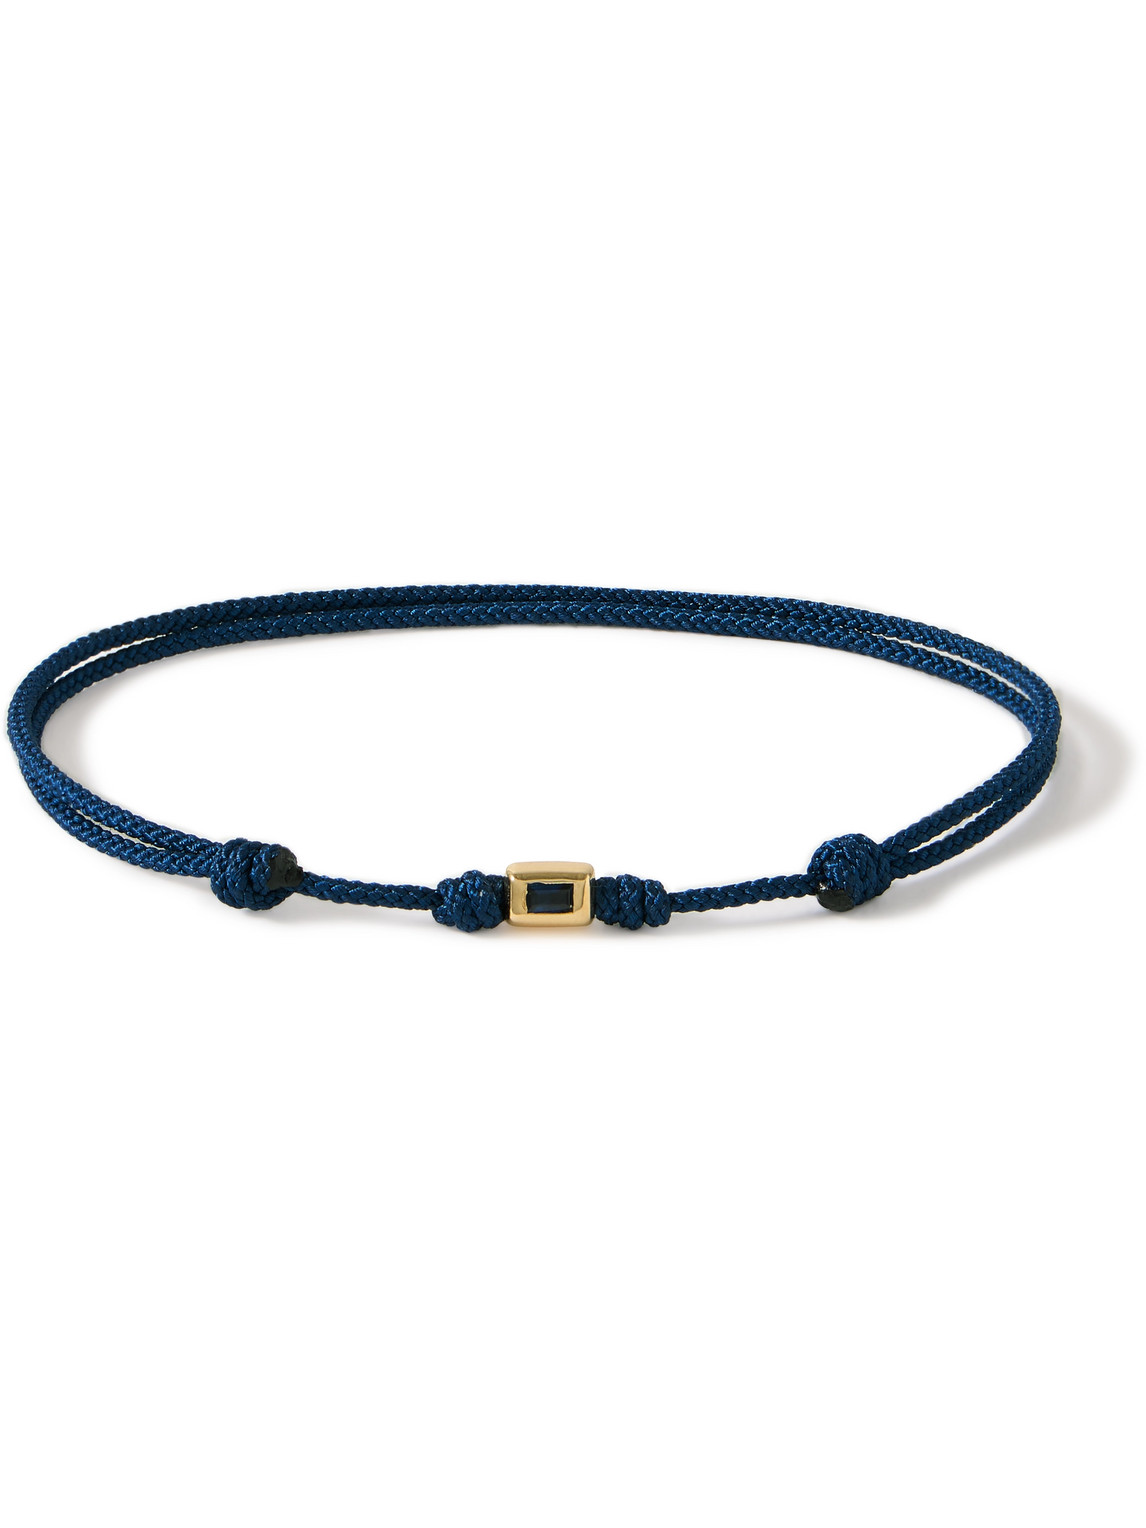 Luis Morais Gold, Sapphire And Cord Bracelet In Blue